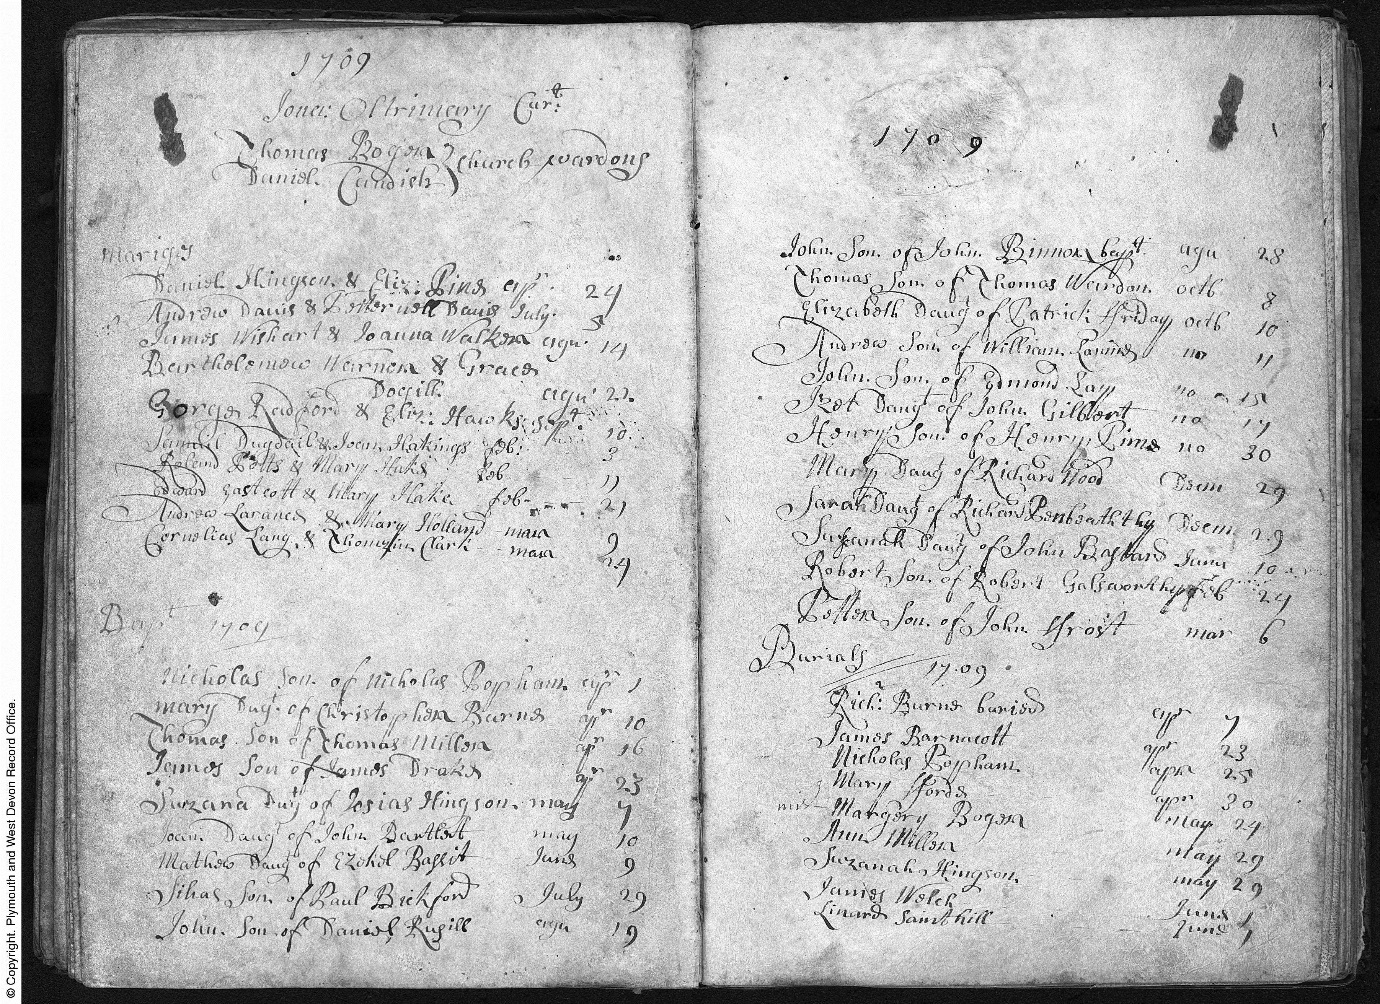 C:\Users\Virginia Rundle\Documents\Ancestry\Northey Moar Files\Galsworthy\Baptism of Robert Galsworthy 24 Feb 1709.jpg